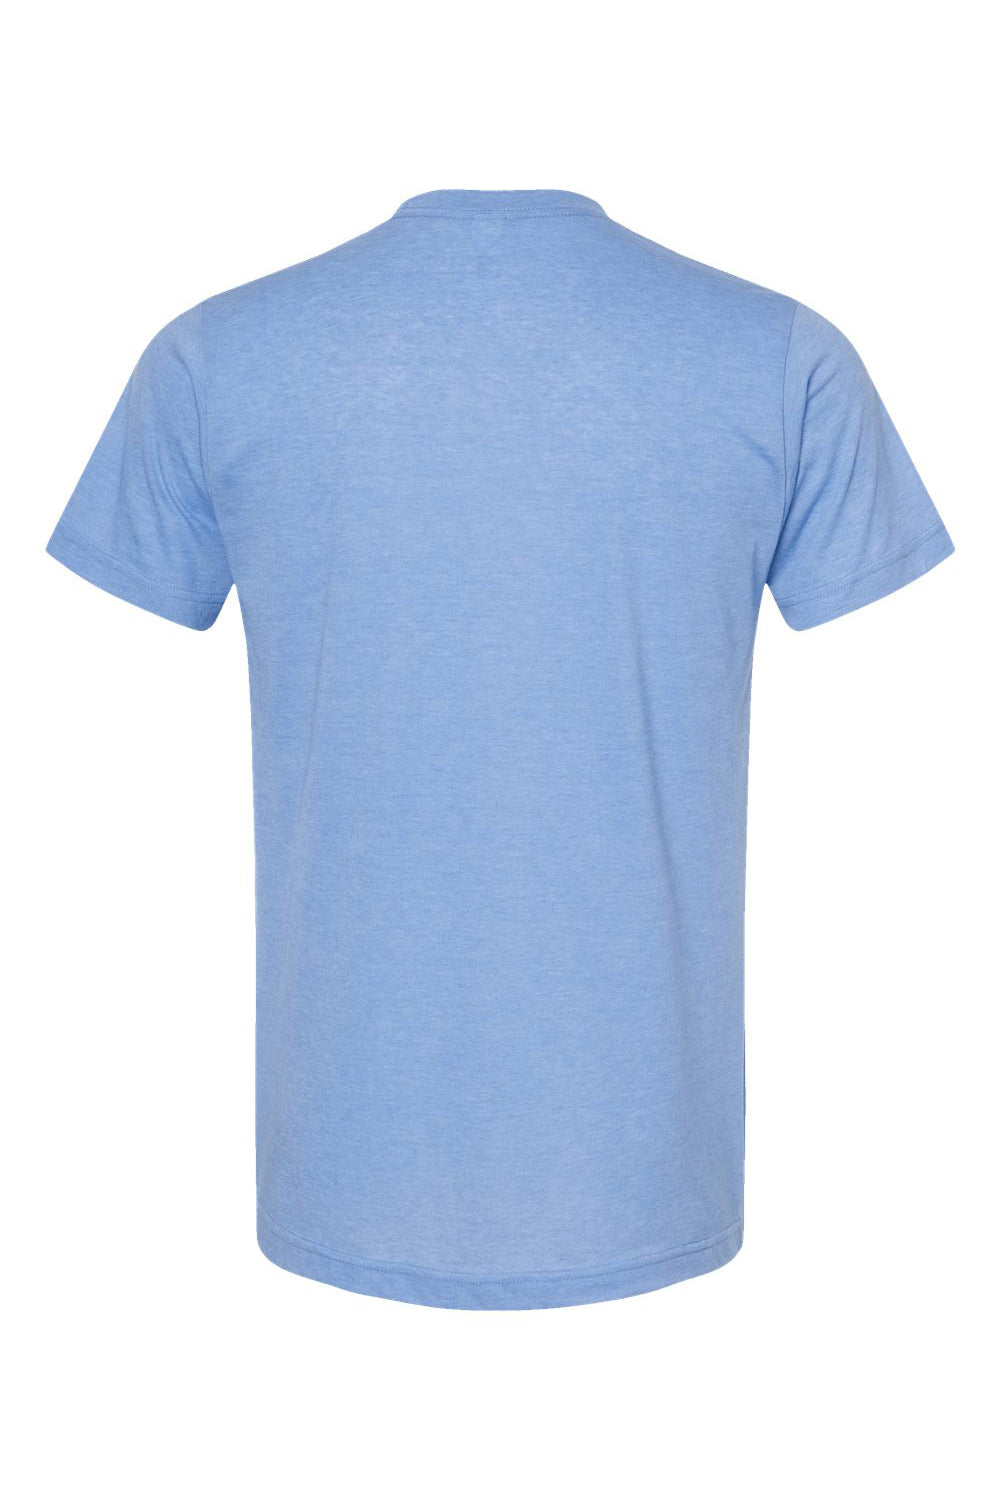 Tultex 241 Mens Poly-Rich Short Sleeve Crewneck T-Shirt Heather Athletic Blue Flat Back